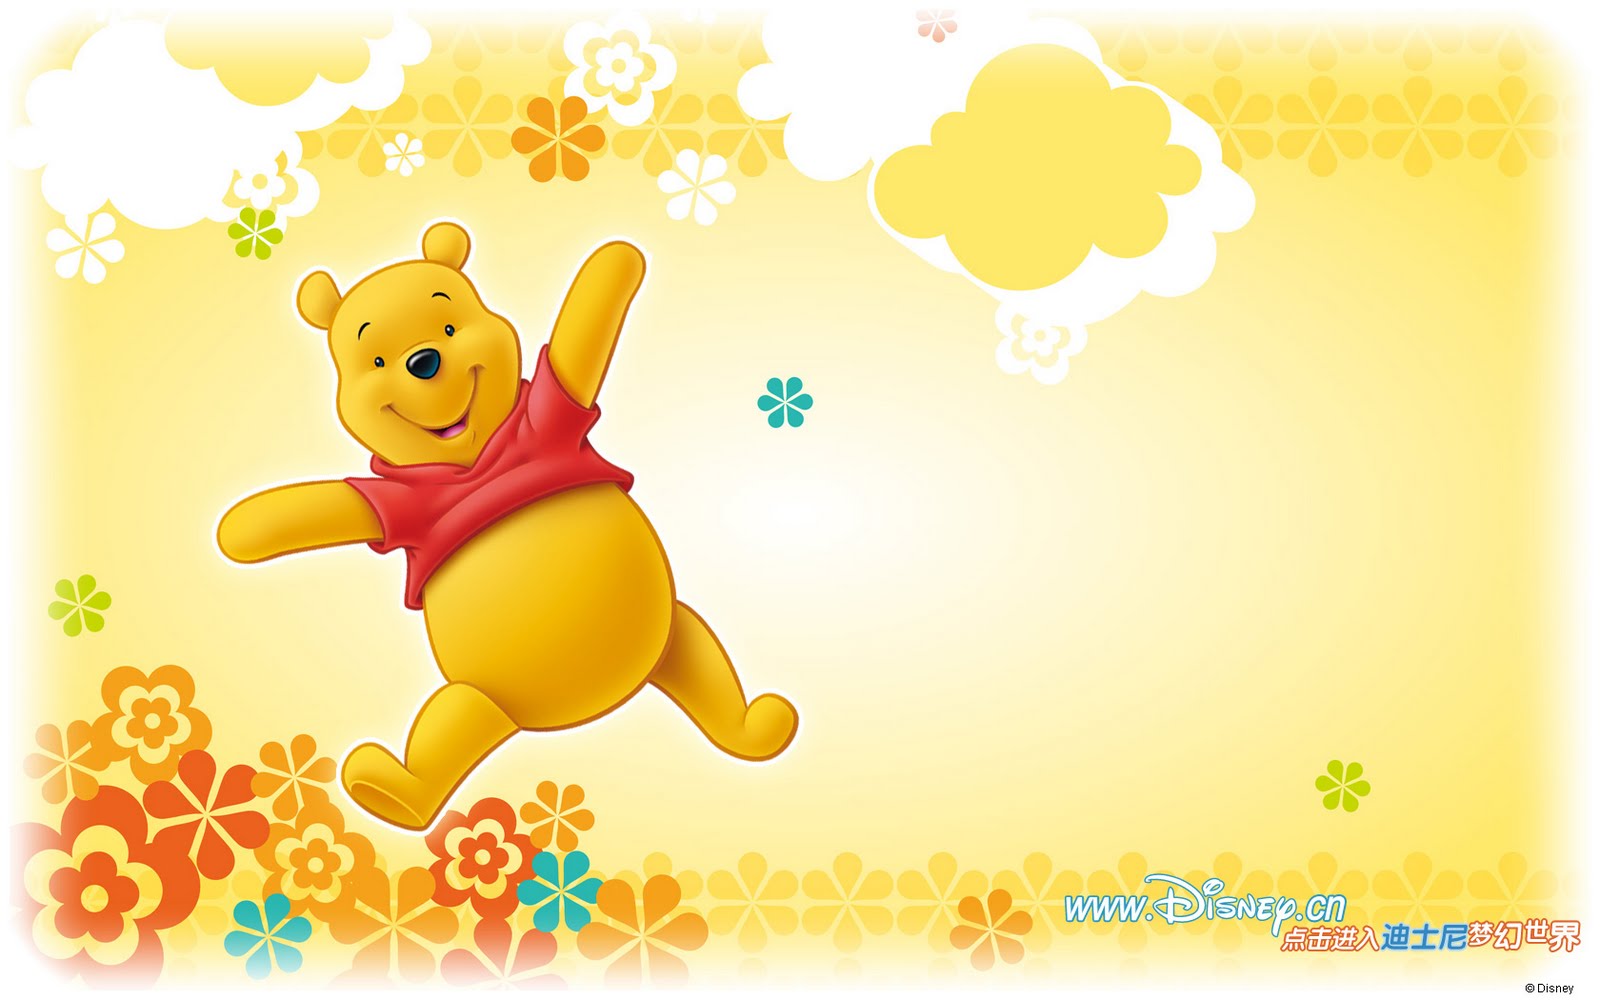  Image Bank 25 Imgenes de Disney Winnie Pooh Incluye Navideas